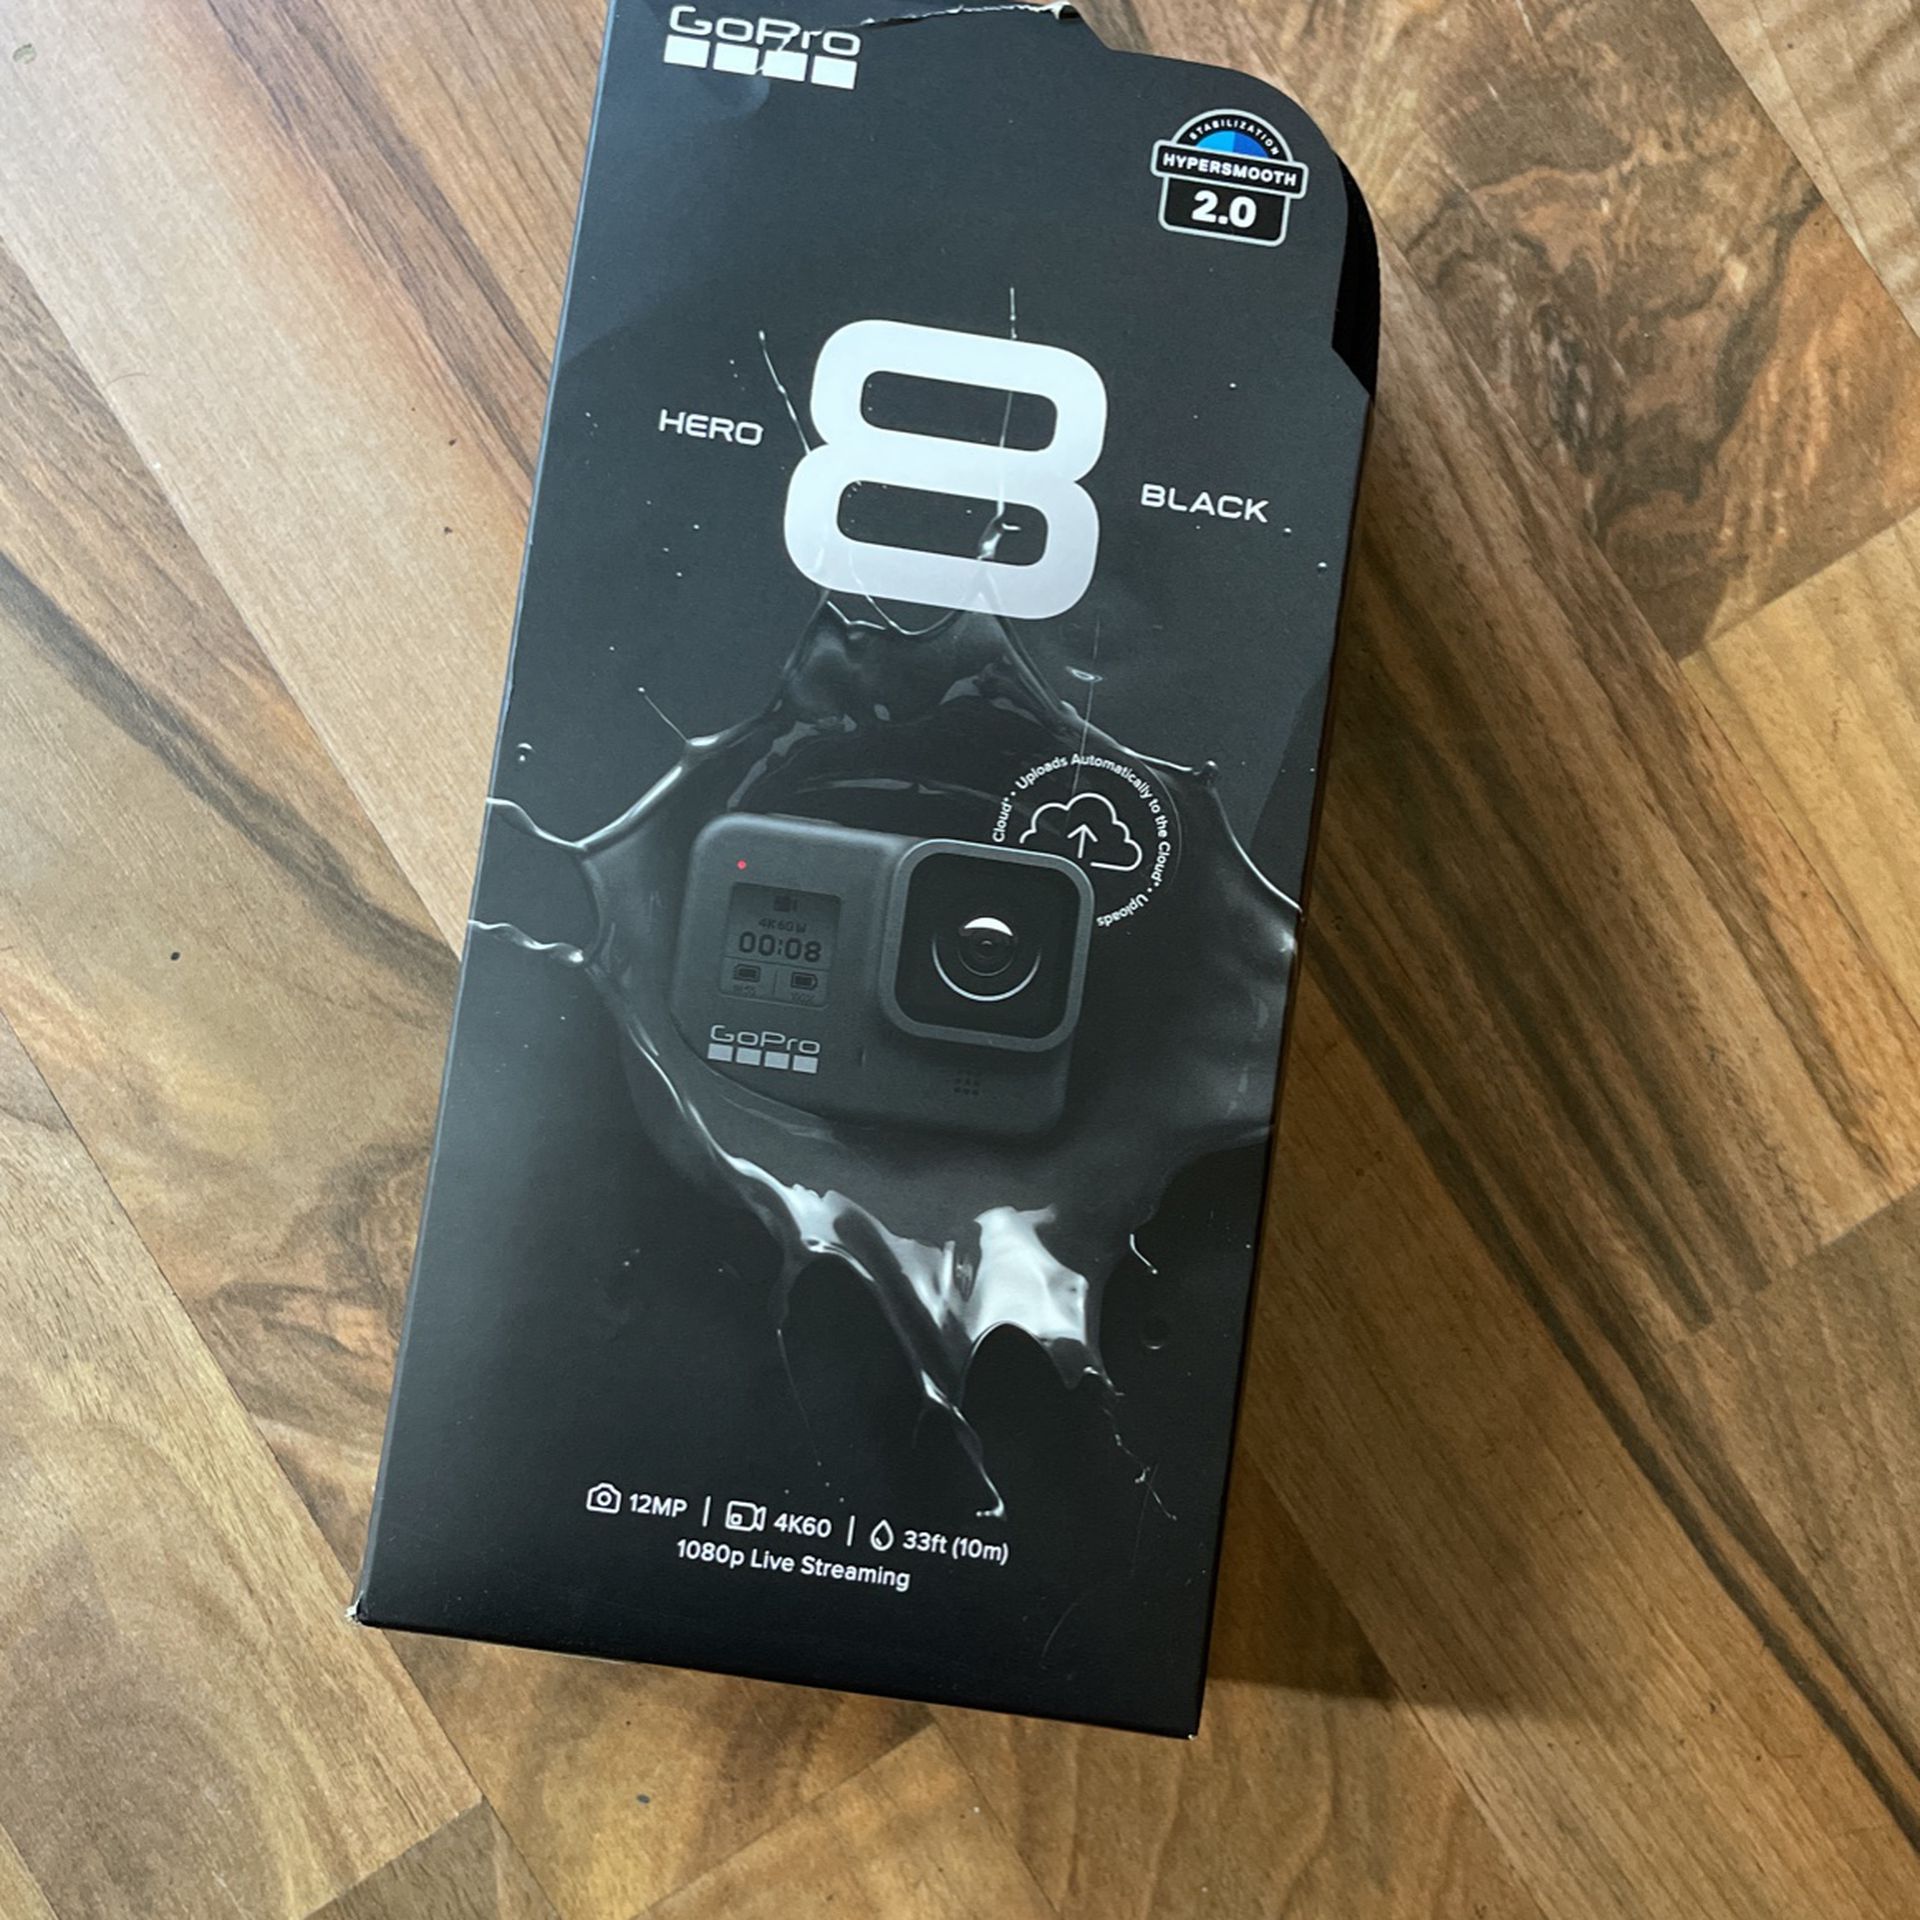 GoPro 8 Black Action Waterproof Camera New In Box 